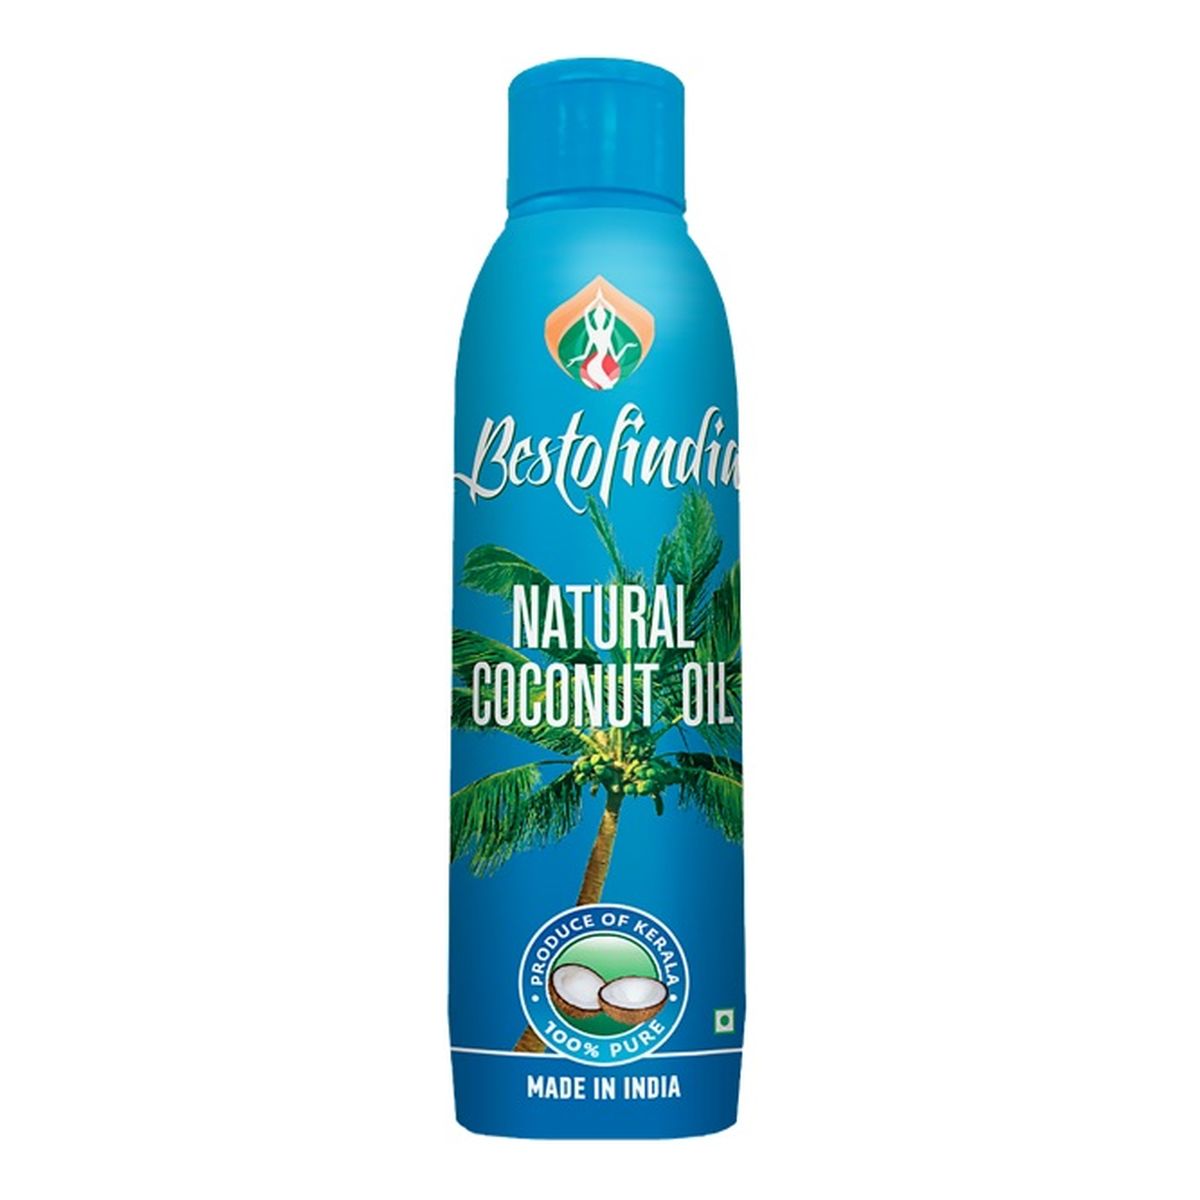 Bestofindia Naturalny olej kokosowy kosmetyczny 100ml